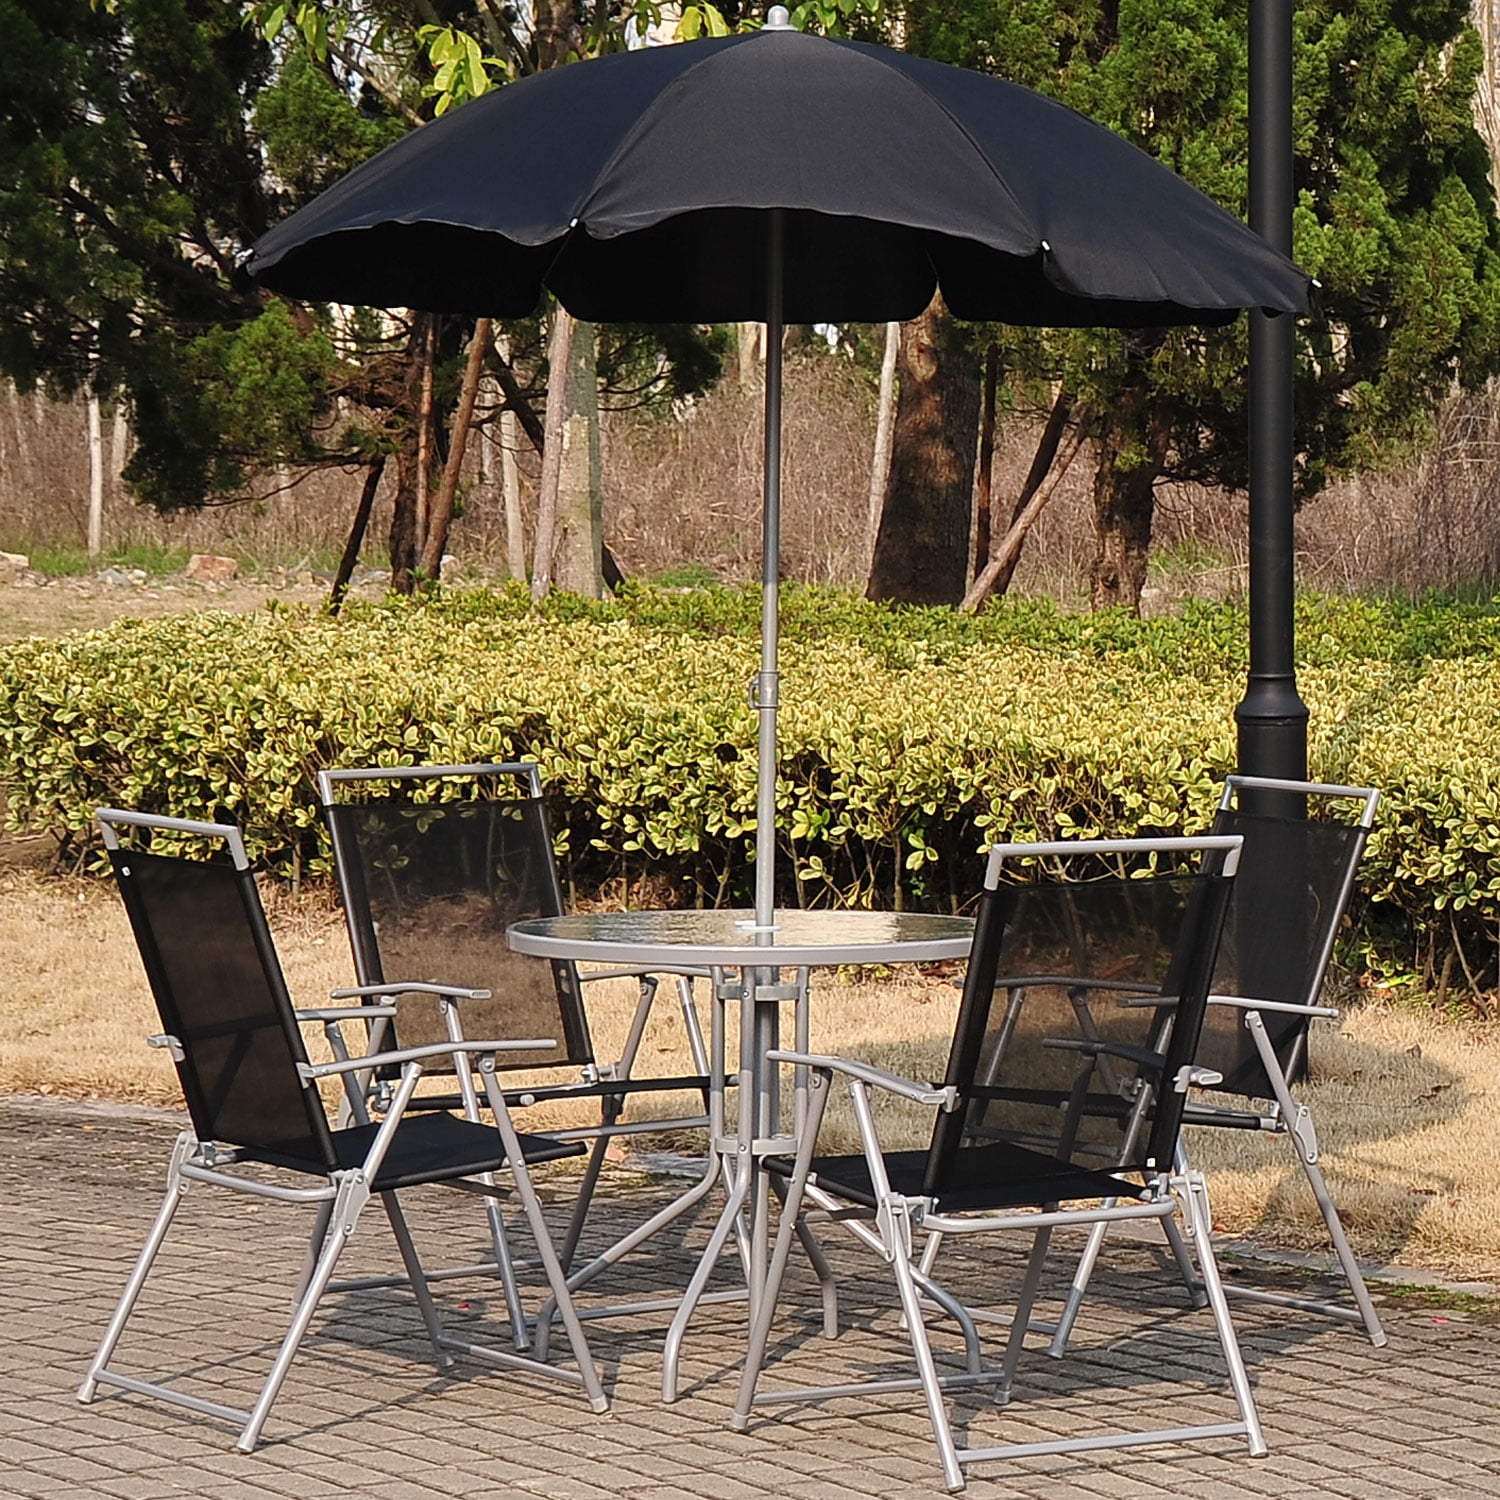 Patio Table Chairs Umbrella Dining Bistro Set Outdoor Garden Folding Furniture